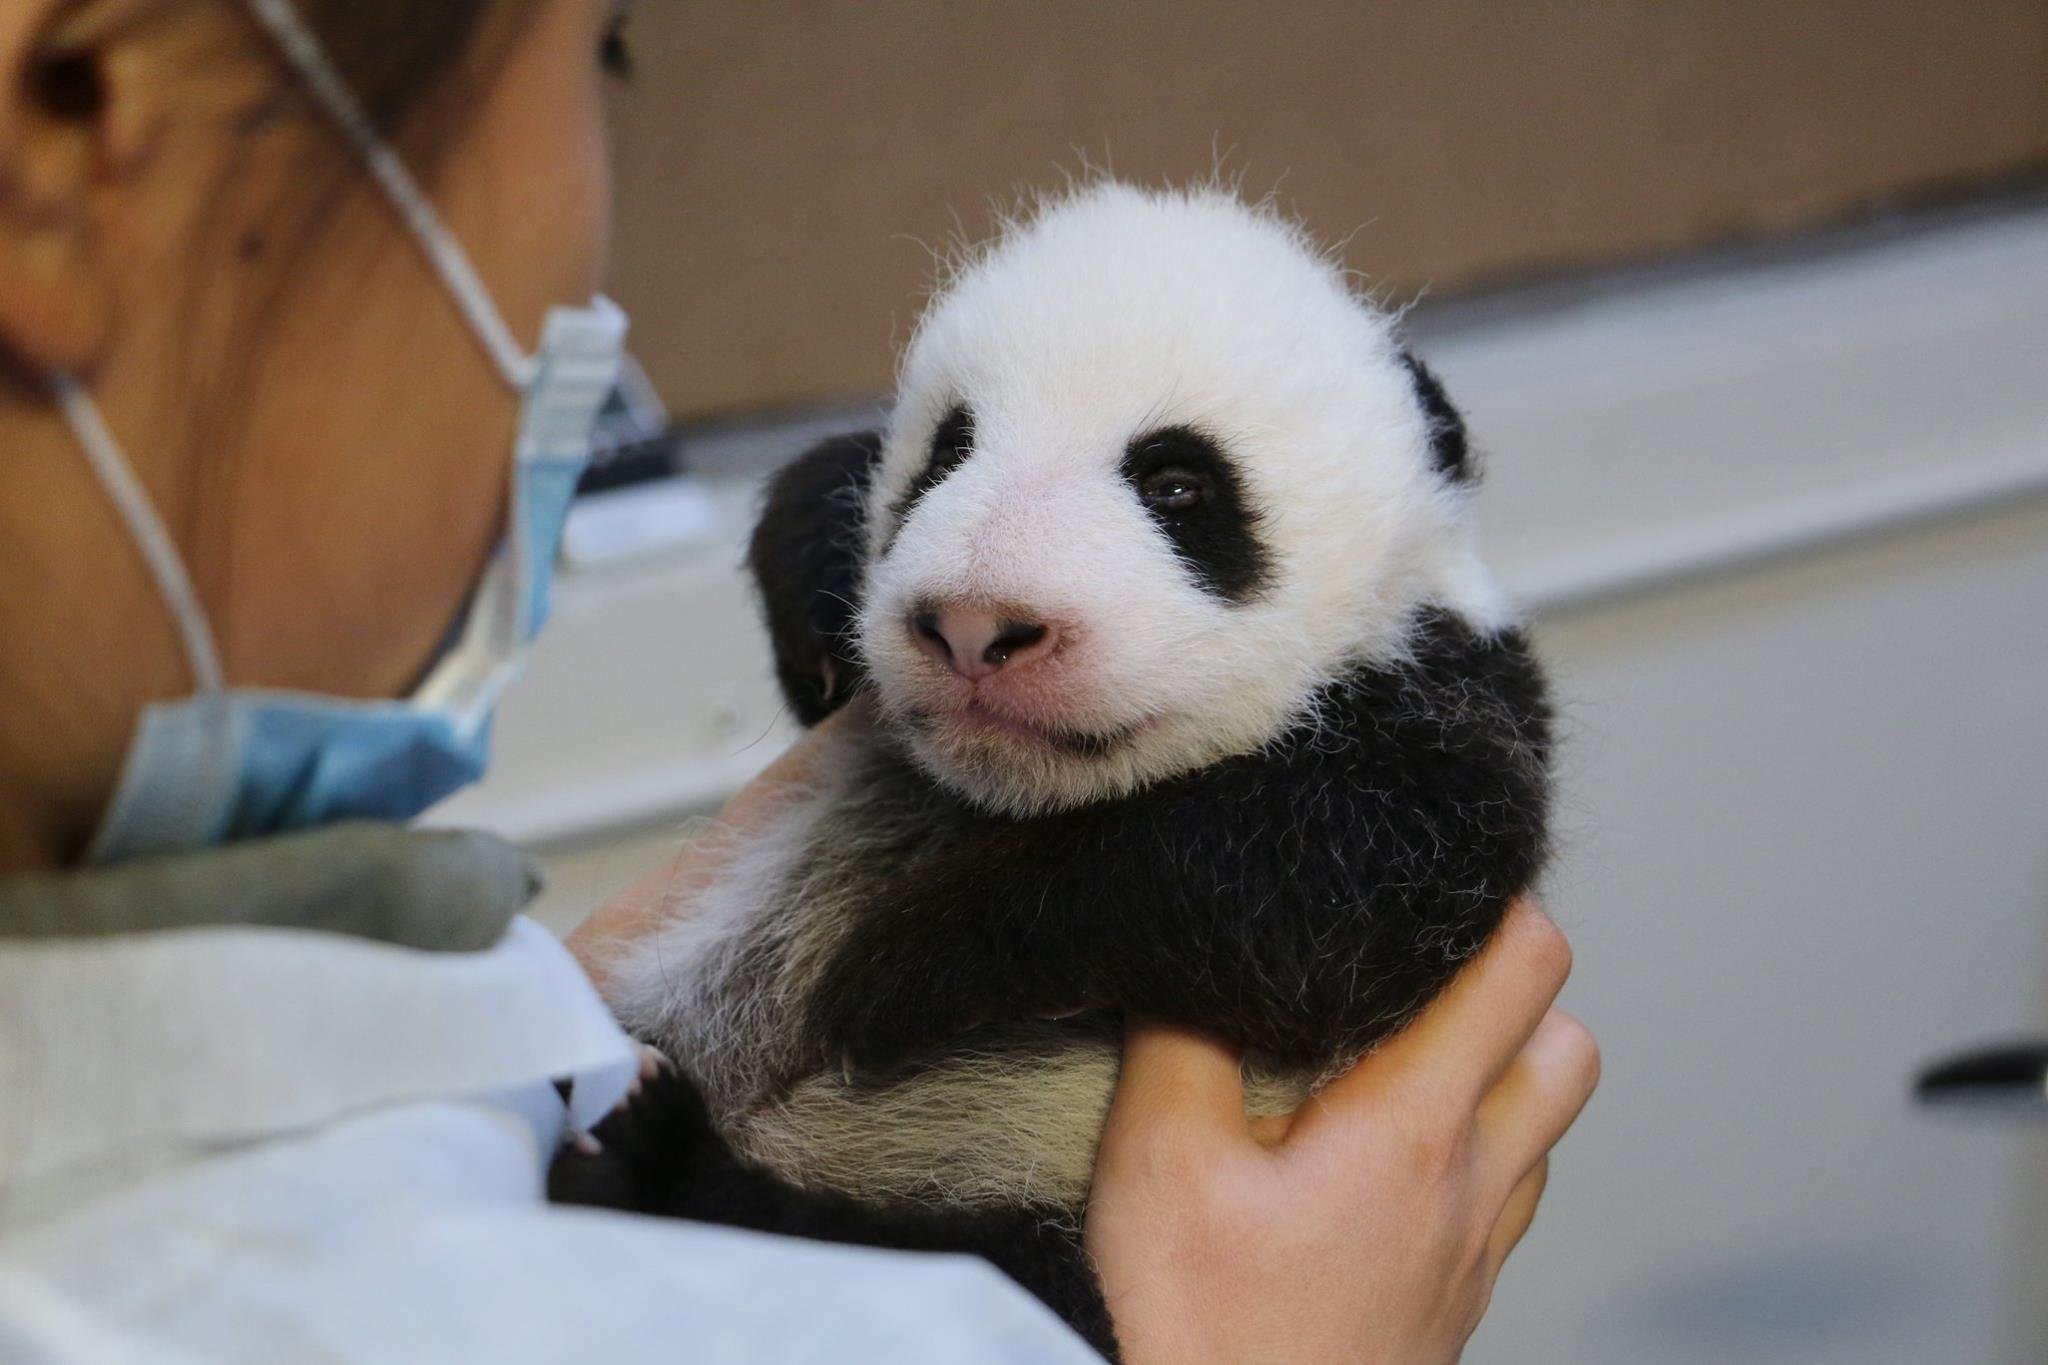 Панда сколько детенышей. Детёныш панды новорожденный. Новорожденный Медвежонок панды. Большая Панда новорожденный. Детёныш панды новорожденный фото.